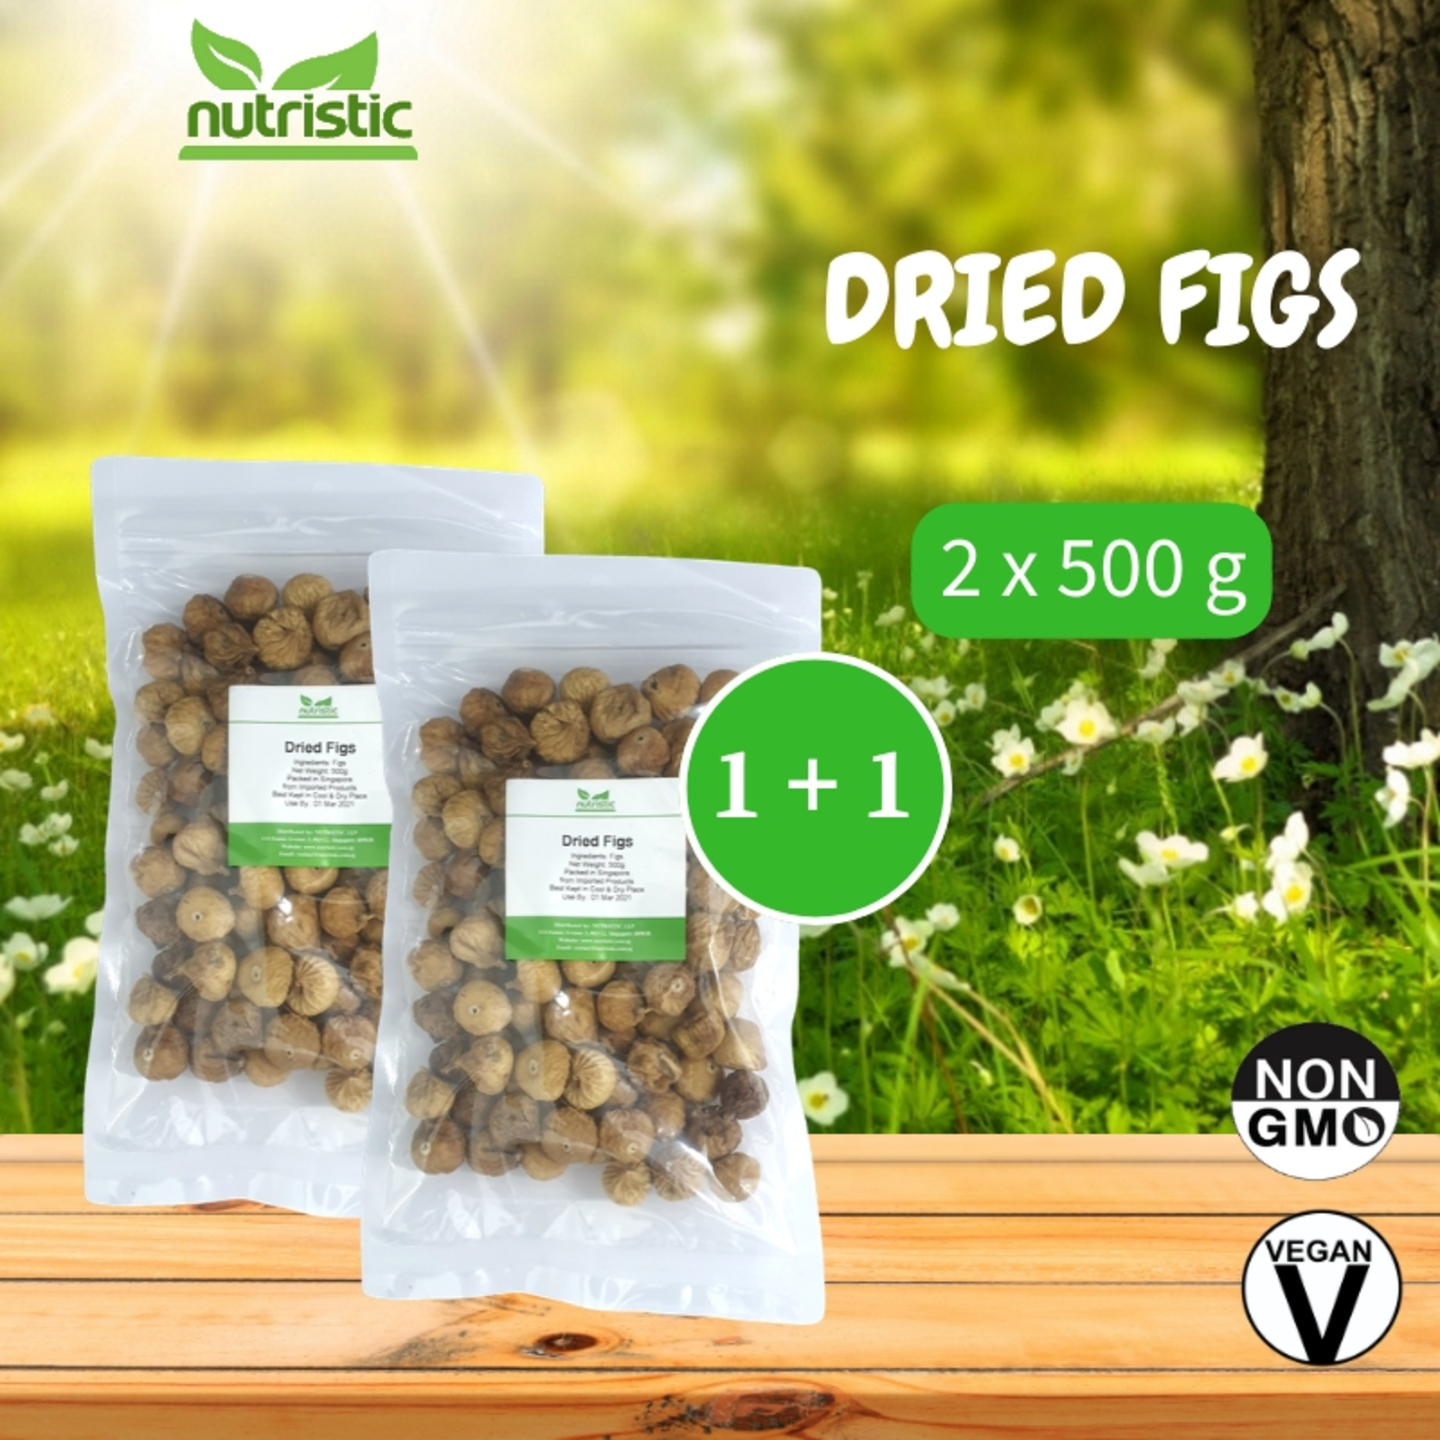 Dried Figs 500g x2 - Value Bundle 1+1